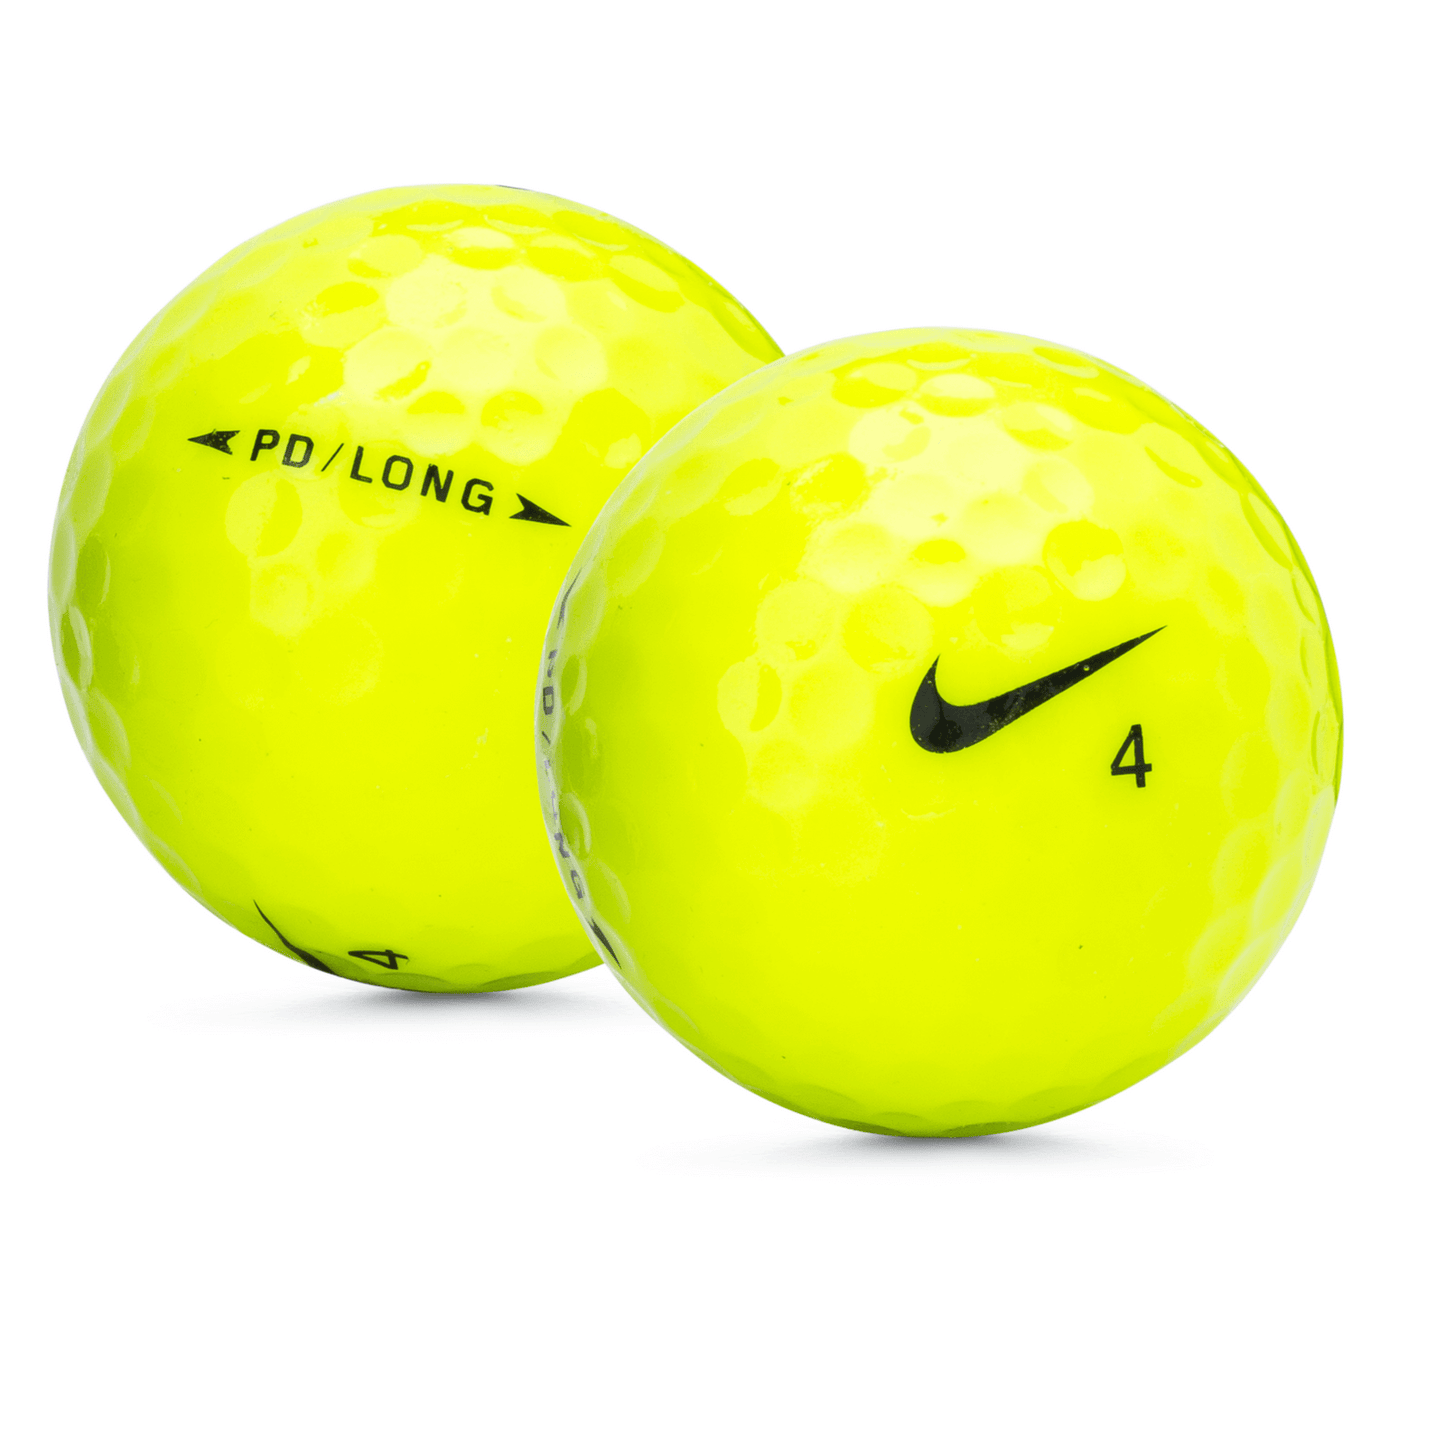 Used Nike PD Long Yellow Golf Balls - 1 Dozen